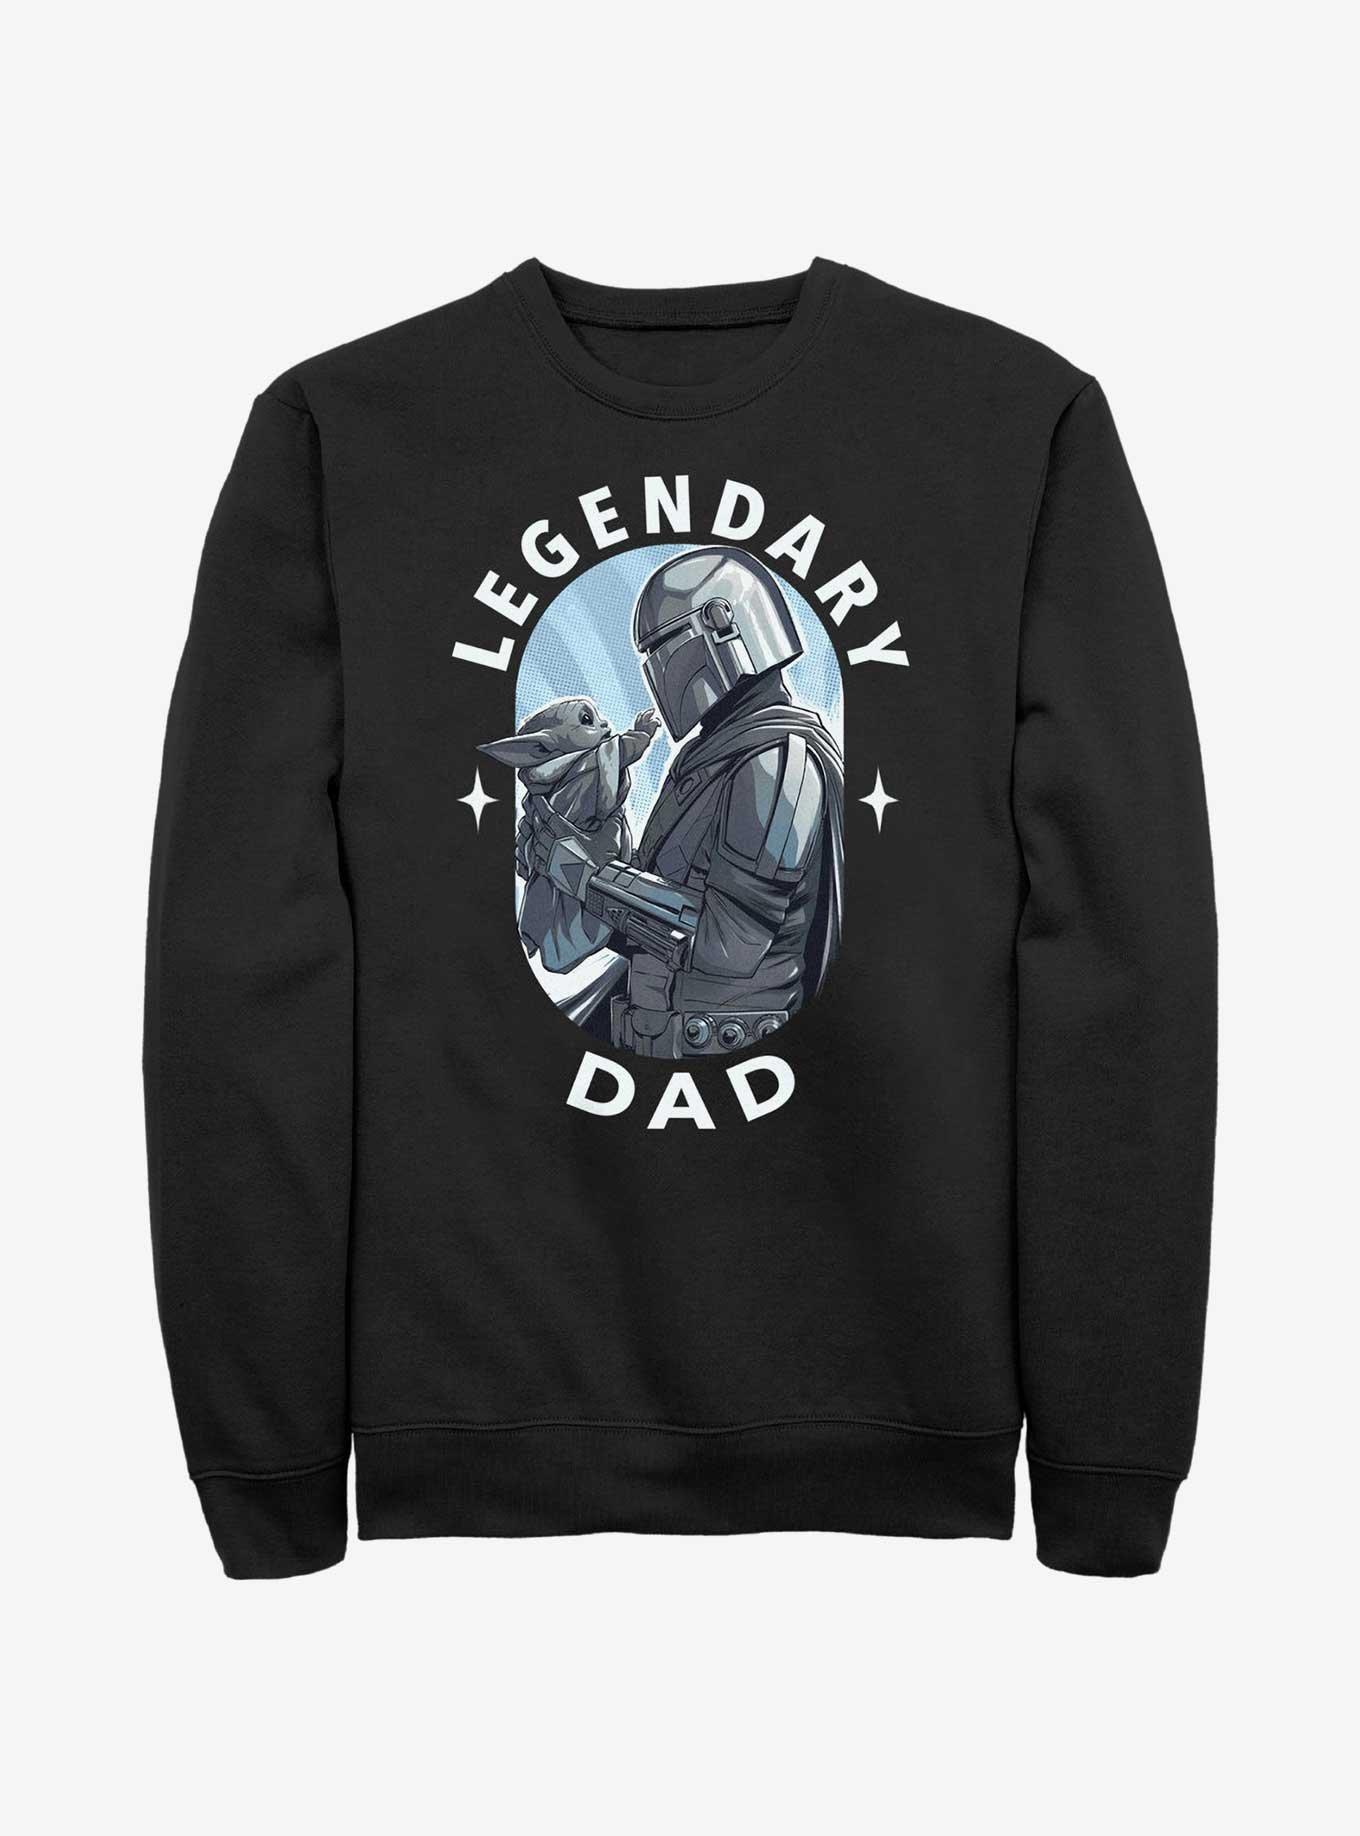 Star Wars The Mandalorian Legendary Dad Sweatshirt